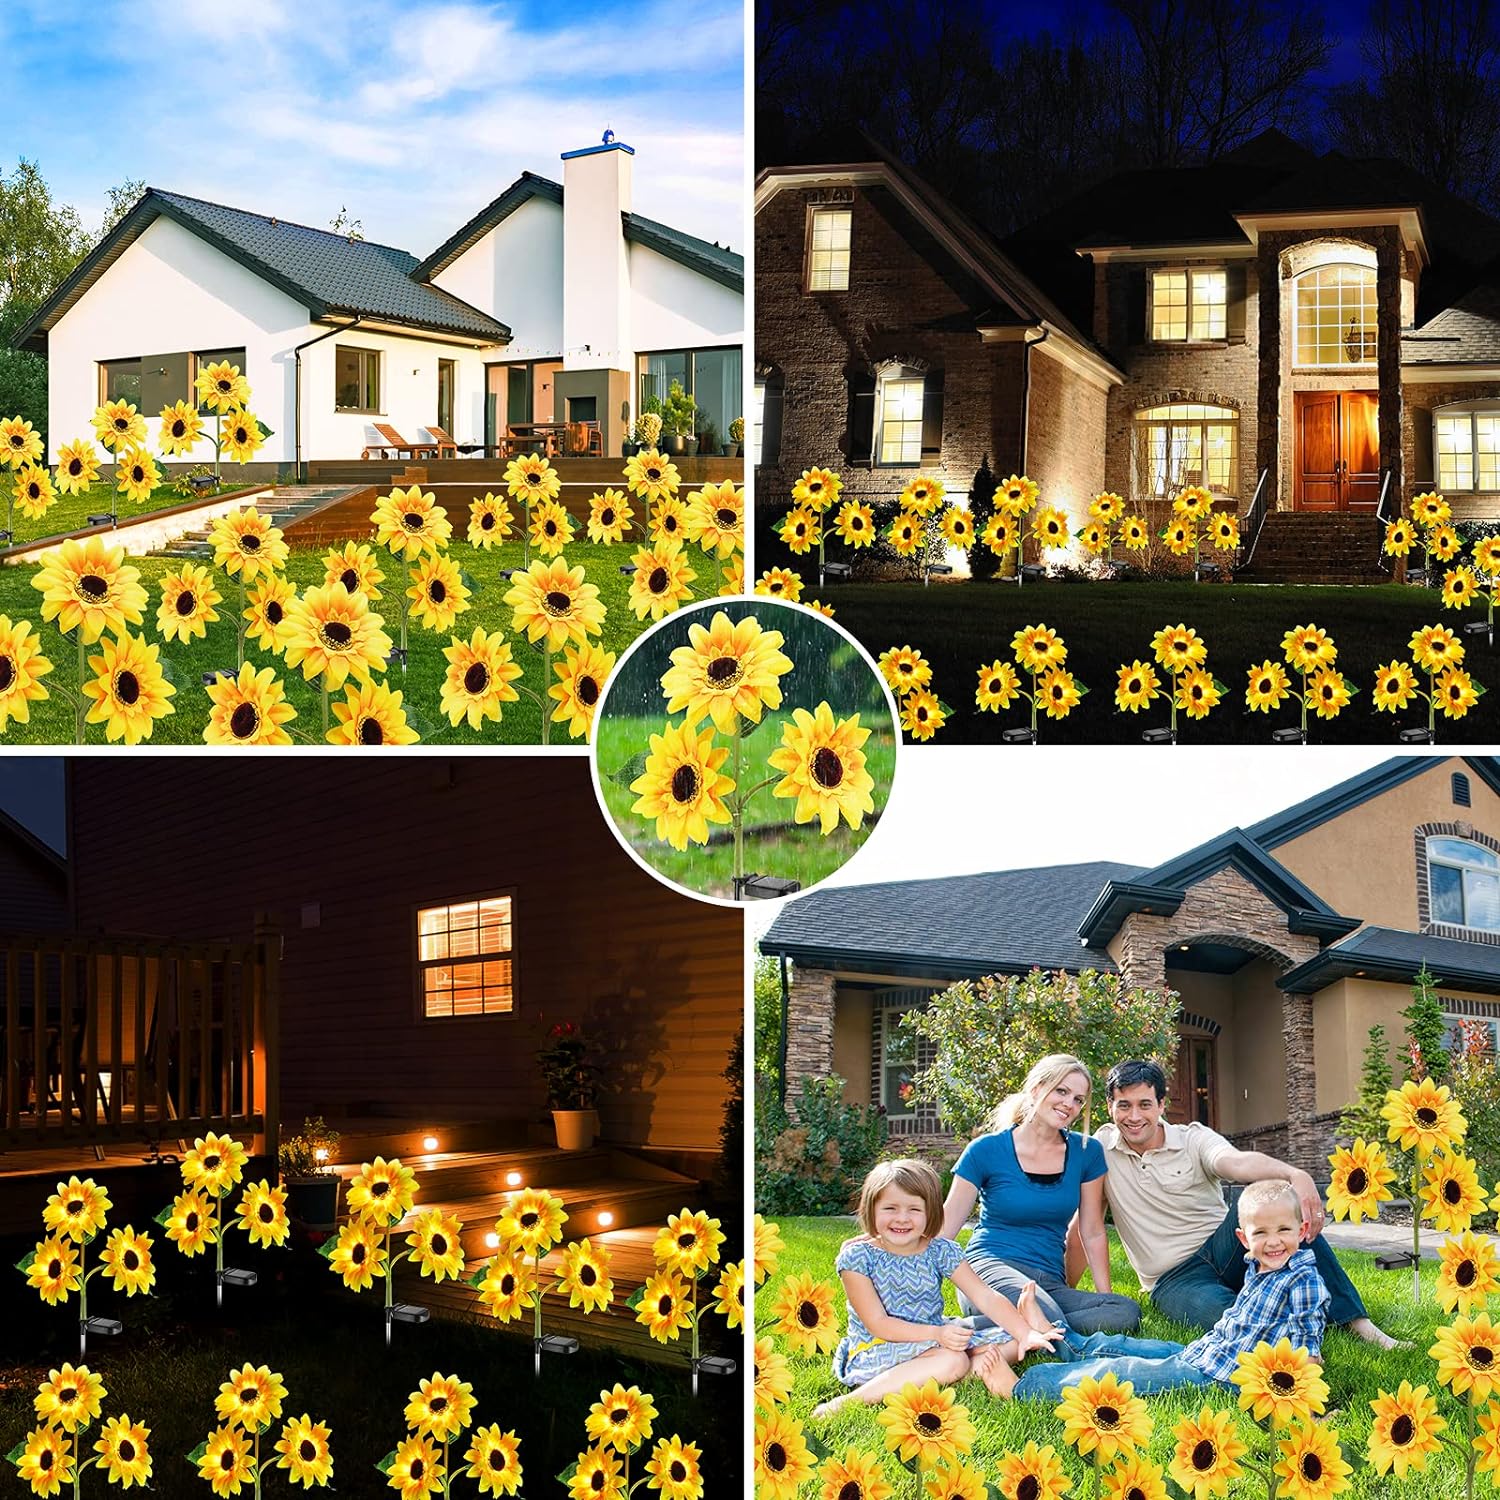 MMHF Outdoor Solar Garden Stake Lights,Upgraded LED Solar Powered Light with 3 Sunflower, Waterproof Solar Decorative Lights for Gar